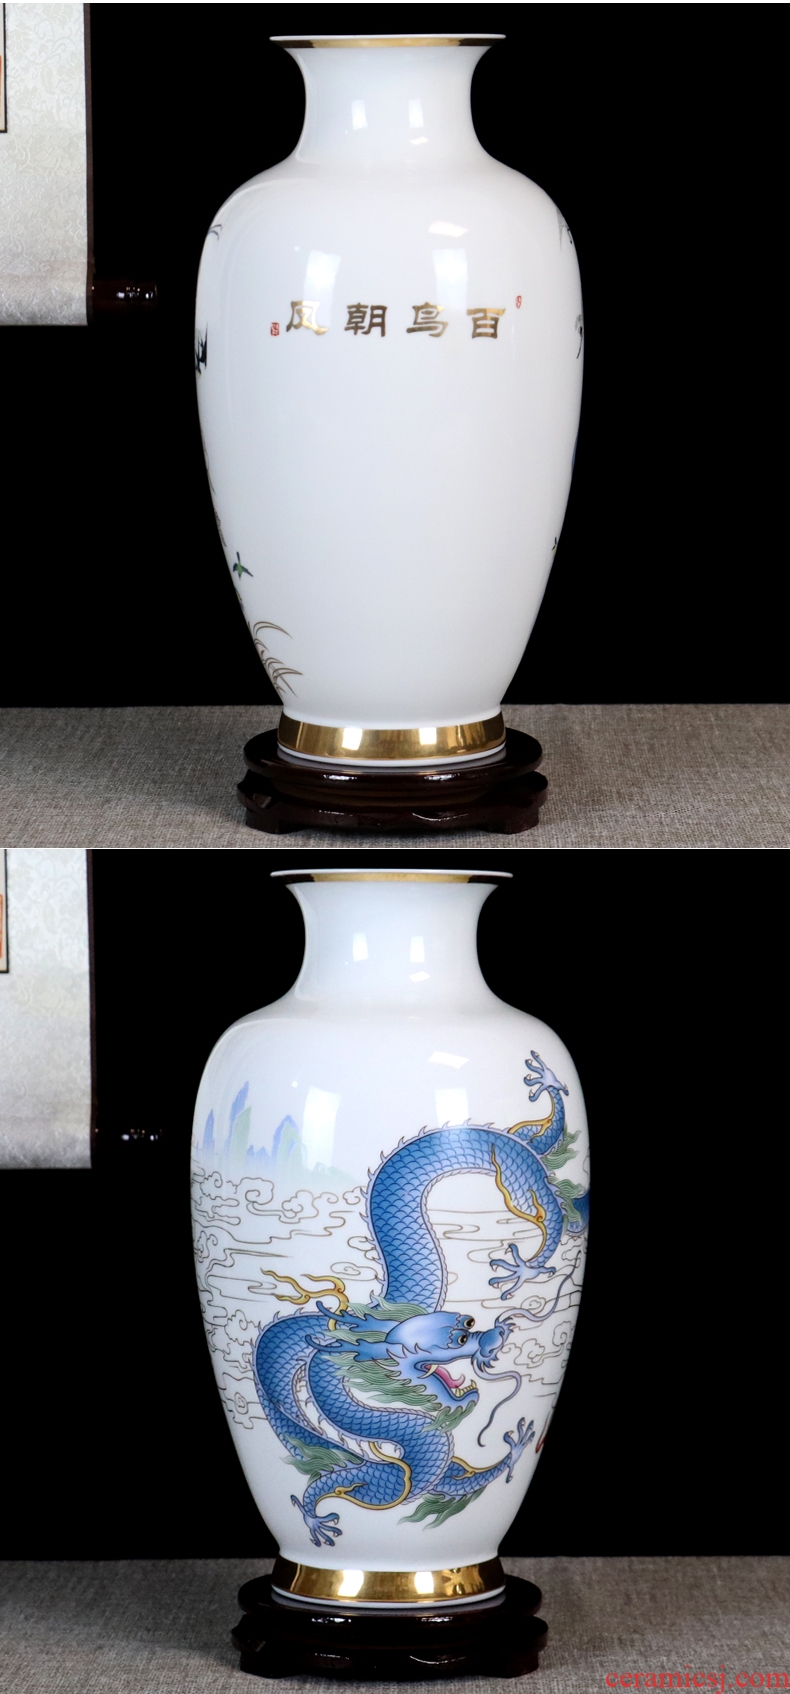 Longfeng fuels the vase gift porcelain of jingdezhen ceramics craft furnishing articles flower arrangement sitting room adornment handicraft